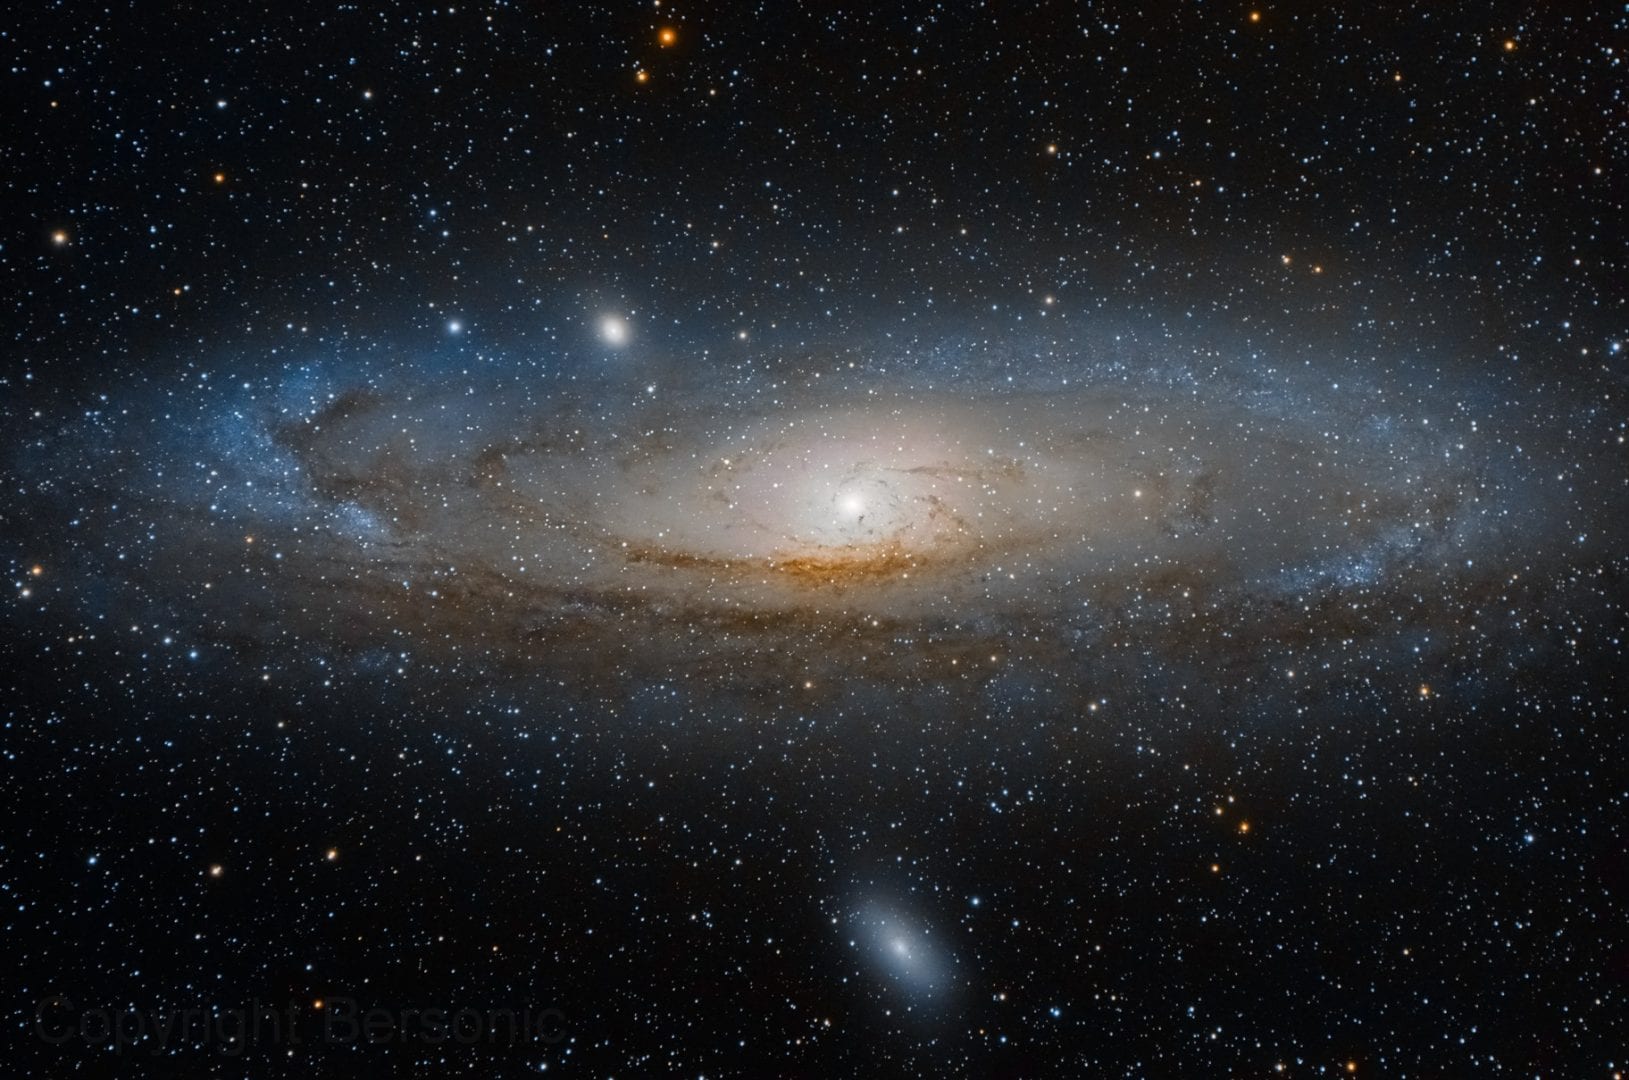 Galáxia  Andrômeda - a grande devoradora de galáxias